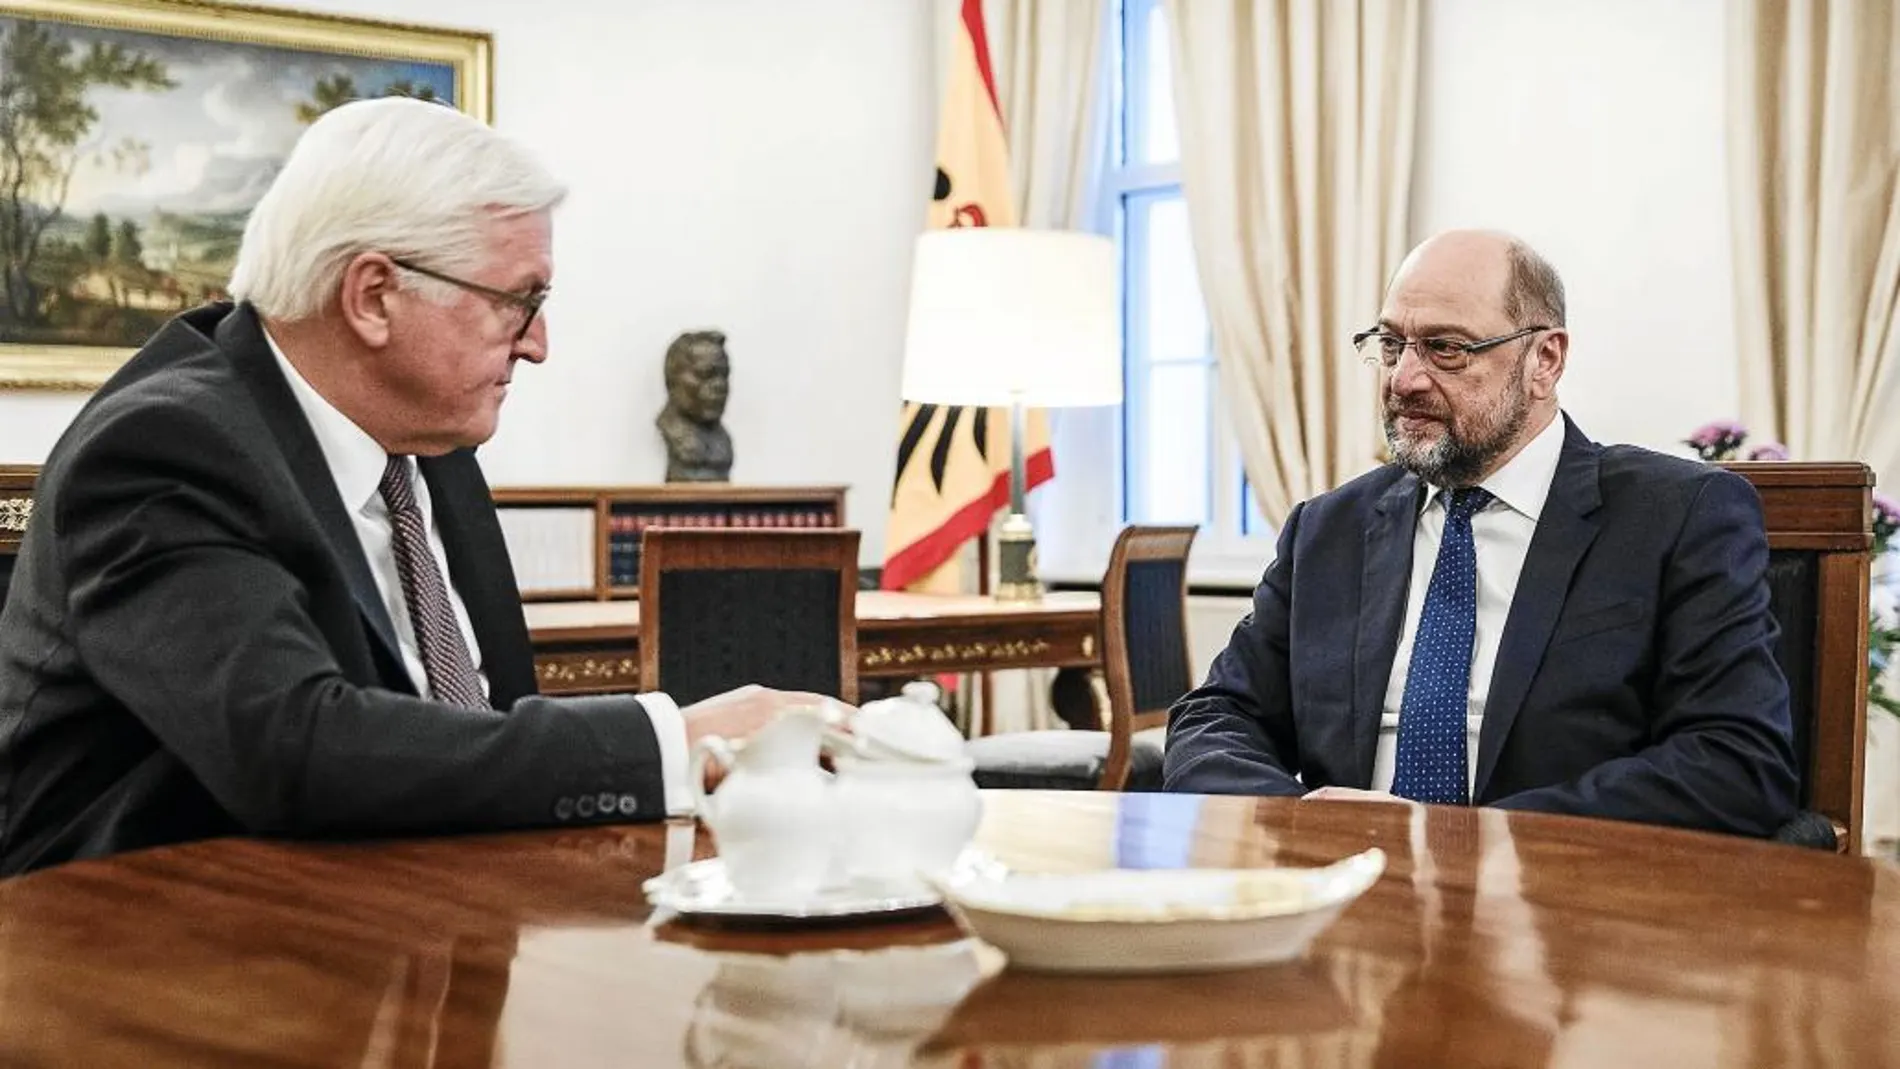 El presidente alemán, Frank Walter Steinmeier, se reunió ayer con el líder socialdemócrata, Martin Schulz